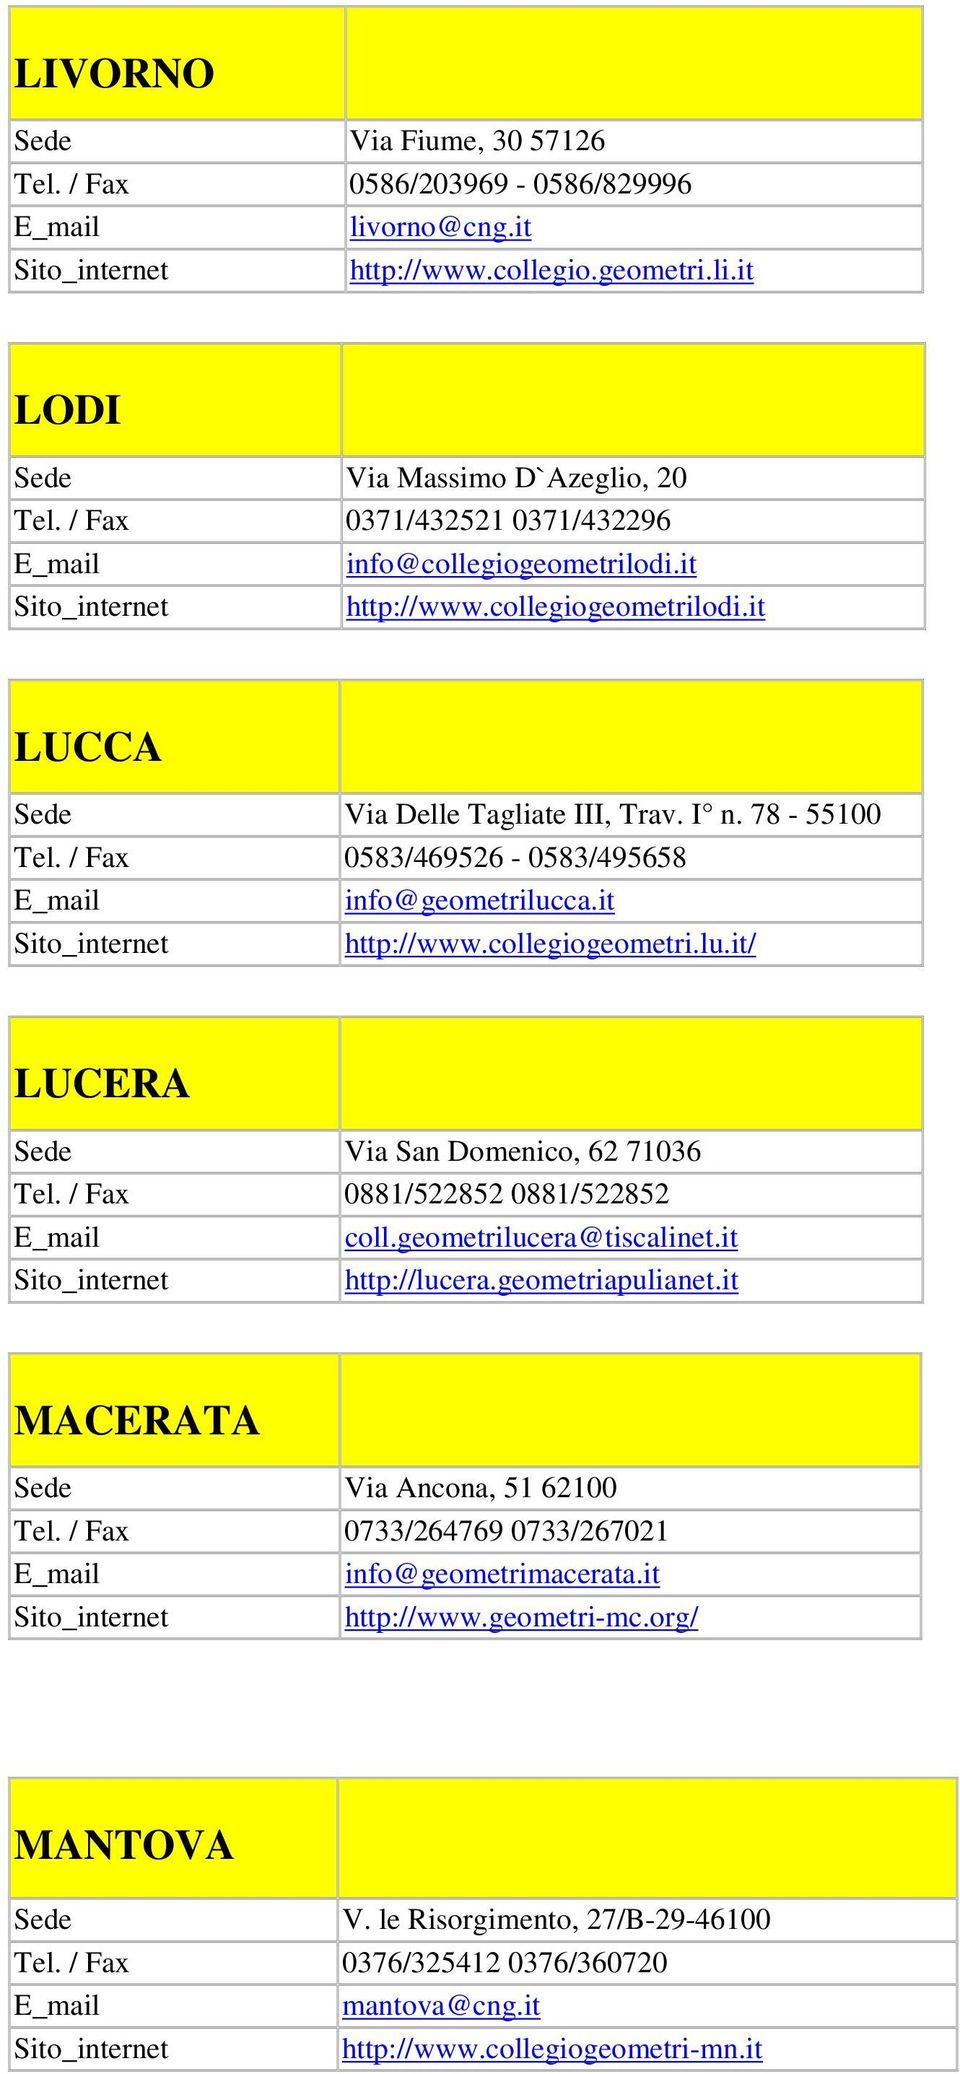 / Fax 0583/469526-0583/495658 info@geometrilucca.it http://www.collegiogeometri.lu.it/ LUCERA Sede Via San Domenico, 62 71036 Tel. / Fax 0881/522852 0881/522852 coll.geometrilucera@tiscalinet.